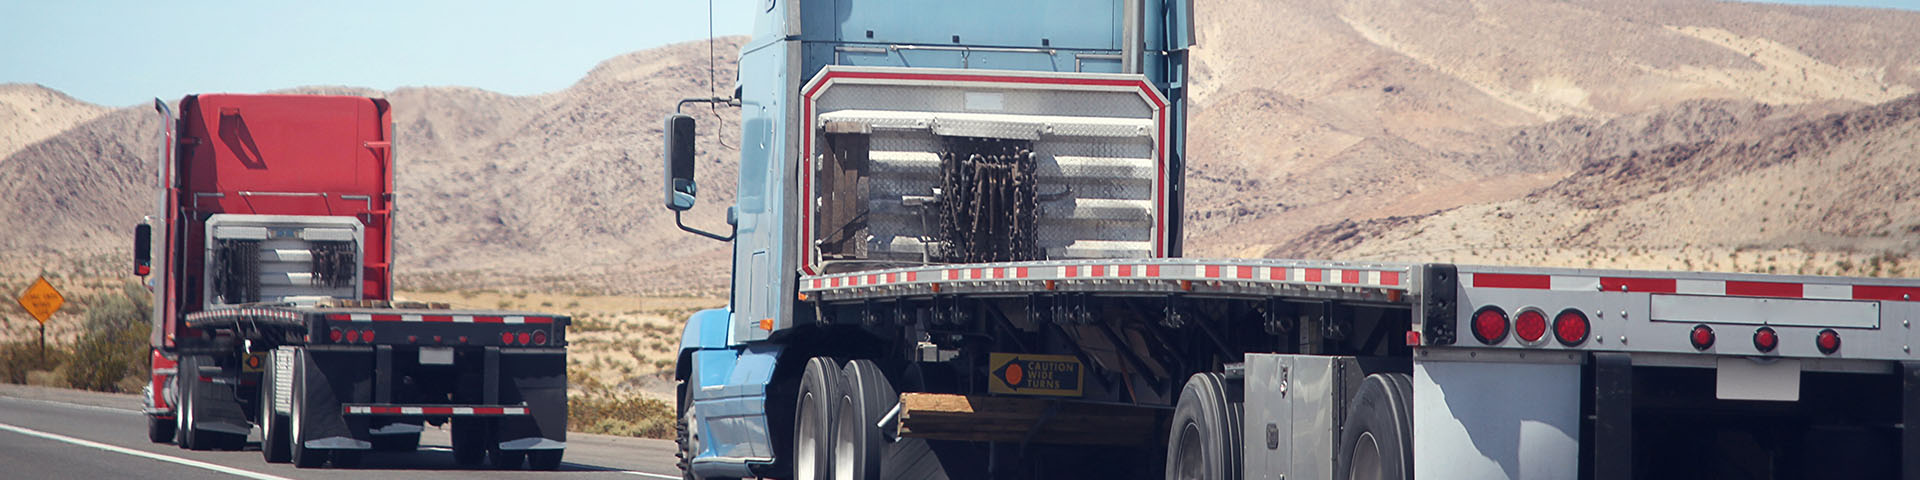 Two Flatbed trucks traveling in the desert - Express Fleet Maintenance - Savannah, GA